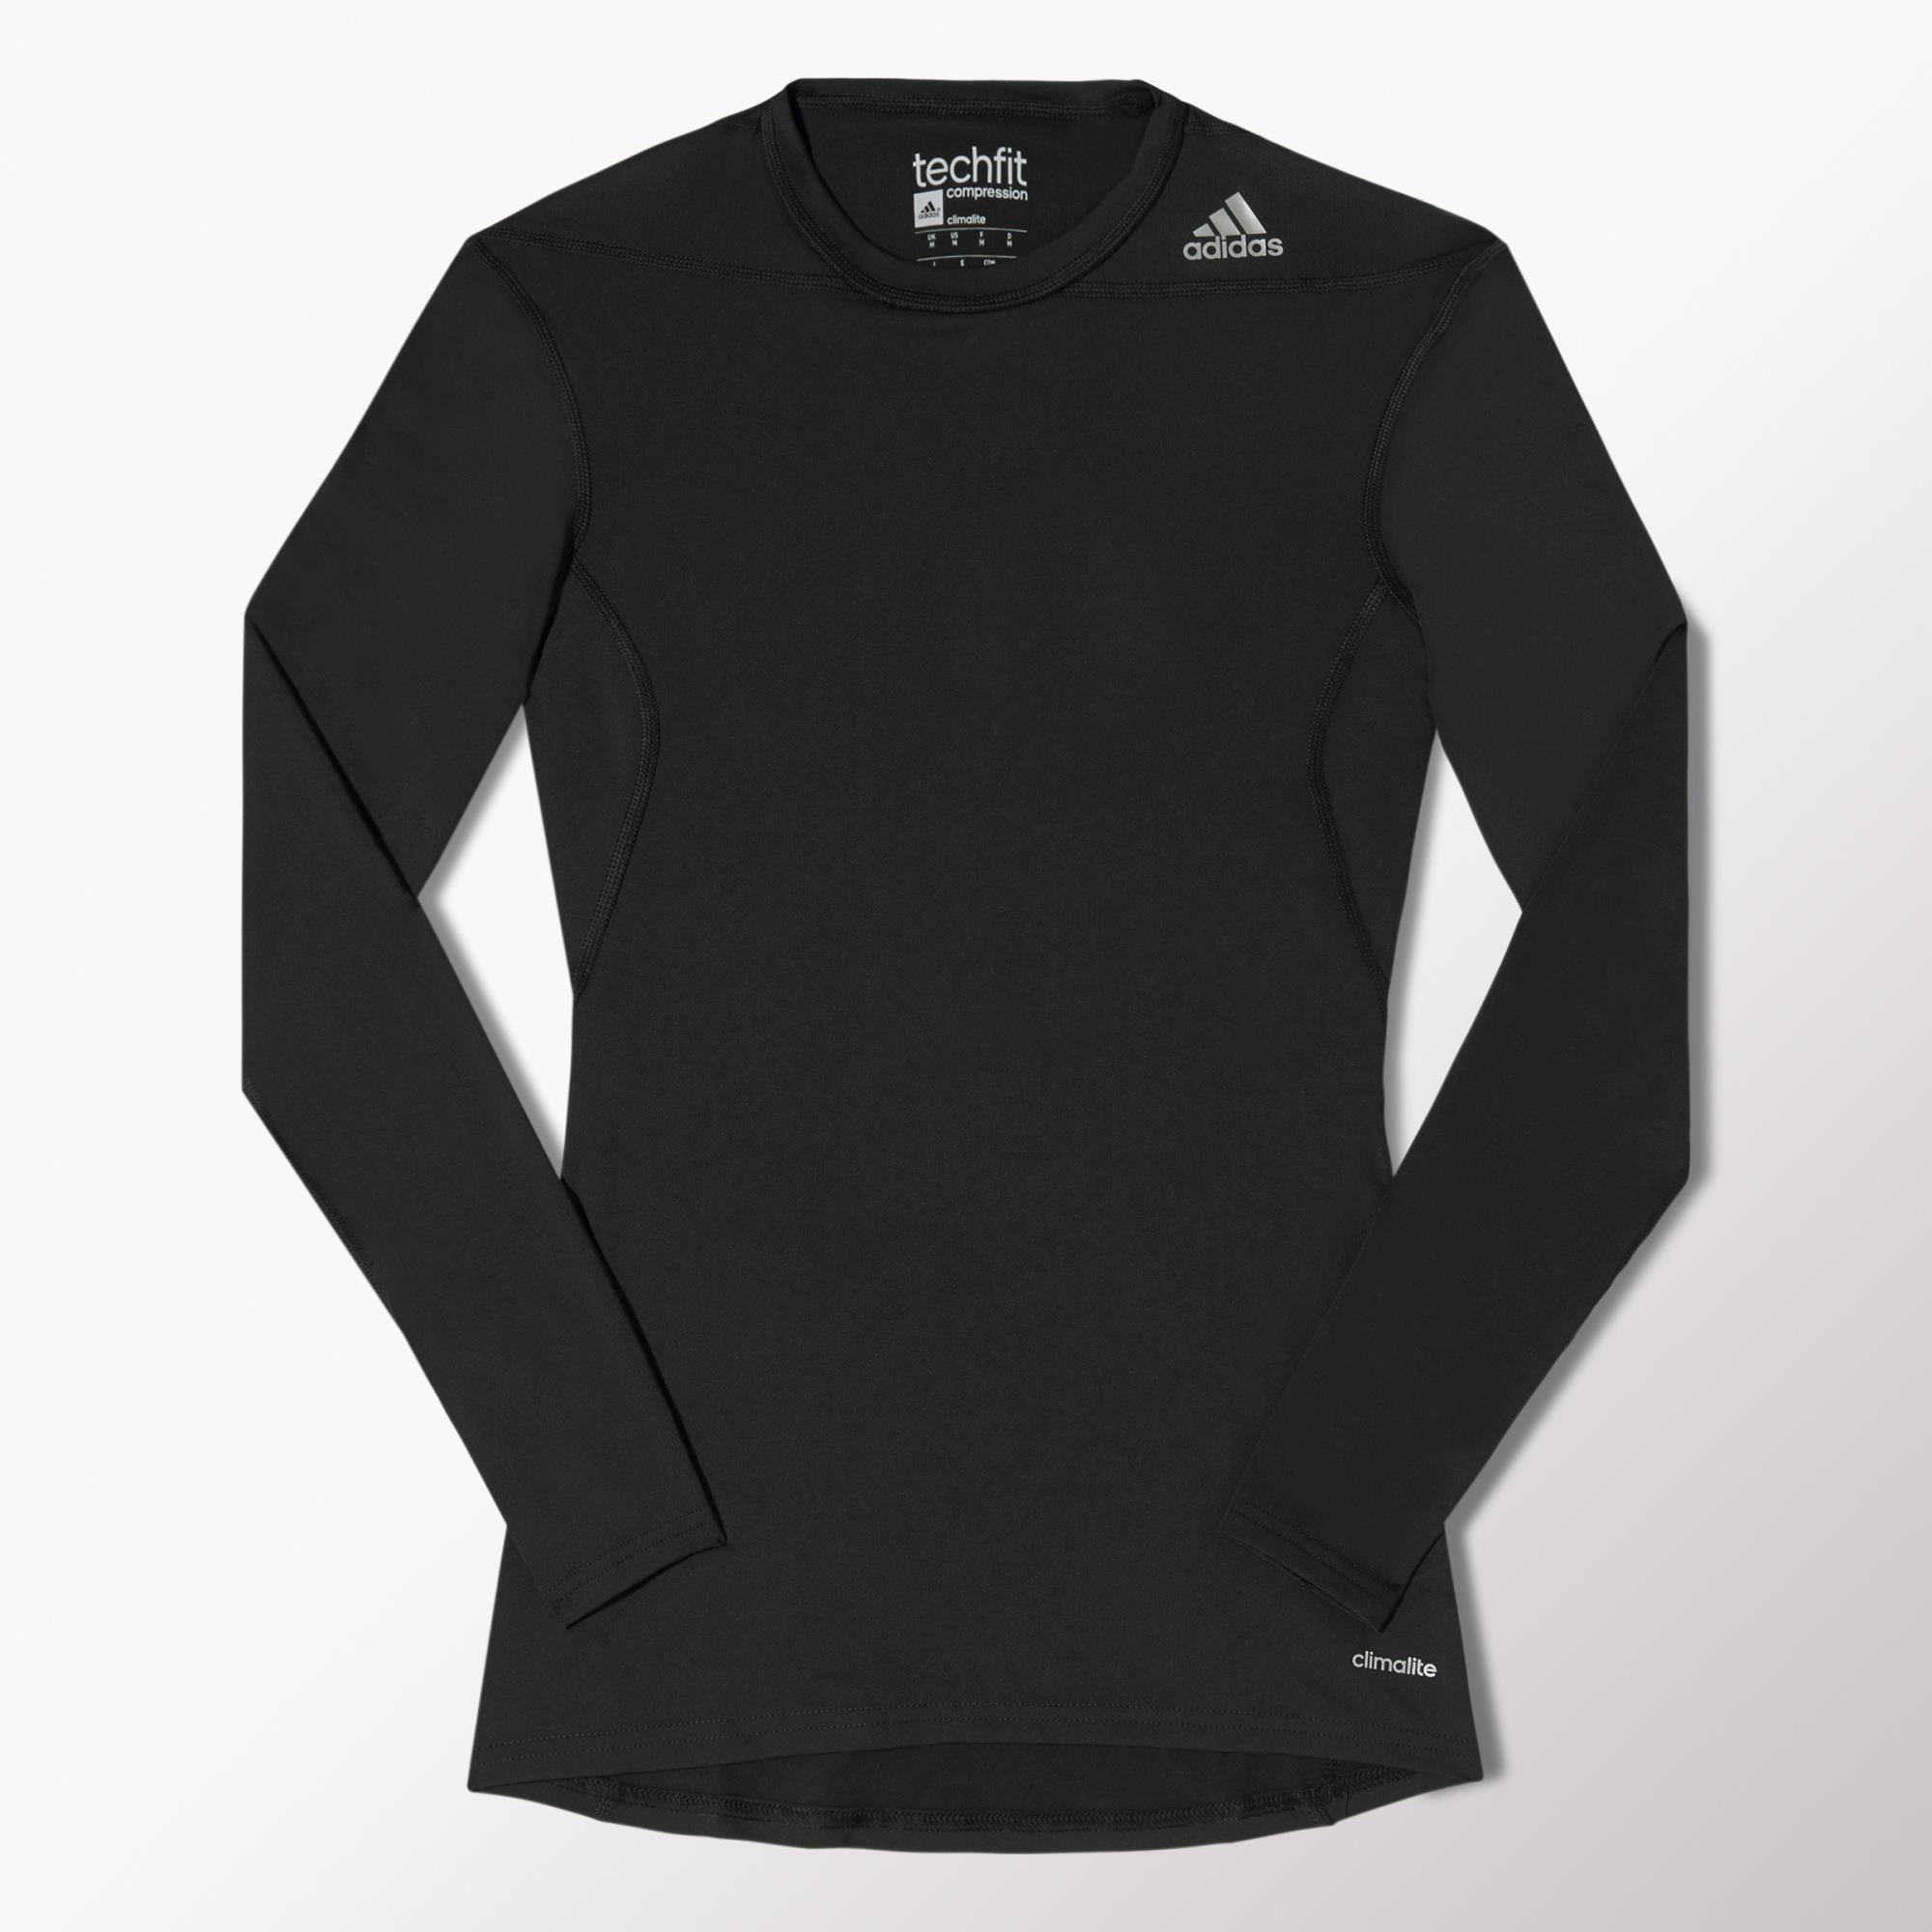 Adidas Mens Techfit Base Long Sleeve Tee - Black - Tennisnuts.com